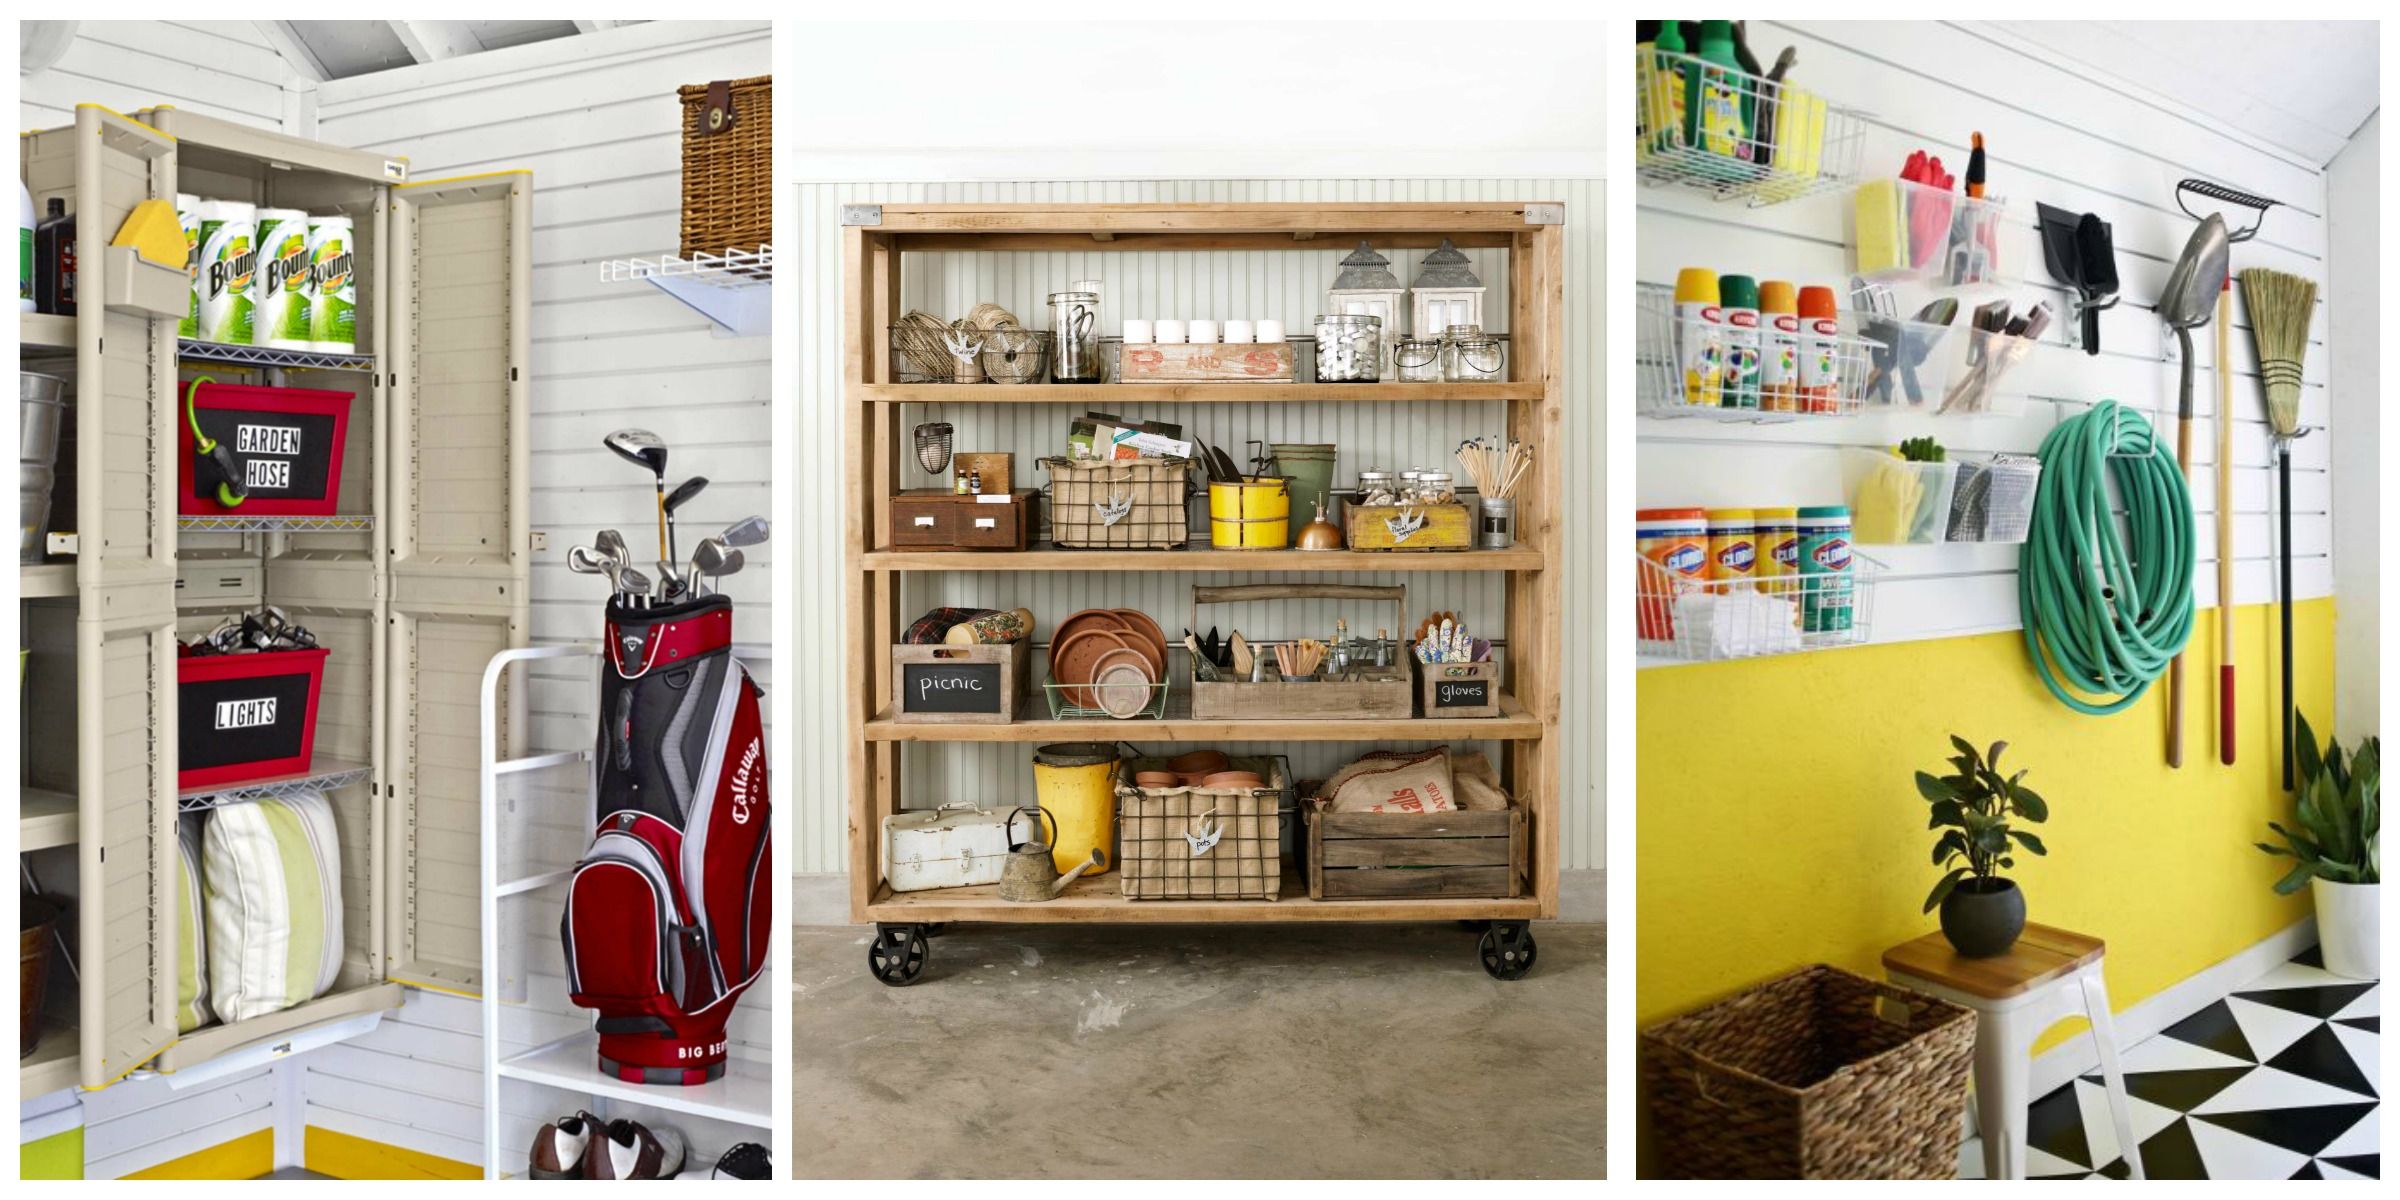 DIY Garage Storage ideas and Organization Tips Part II - Rambling Renovators